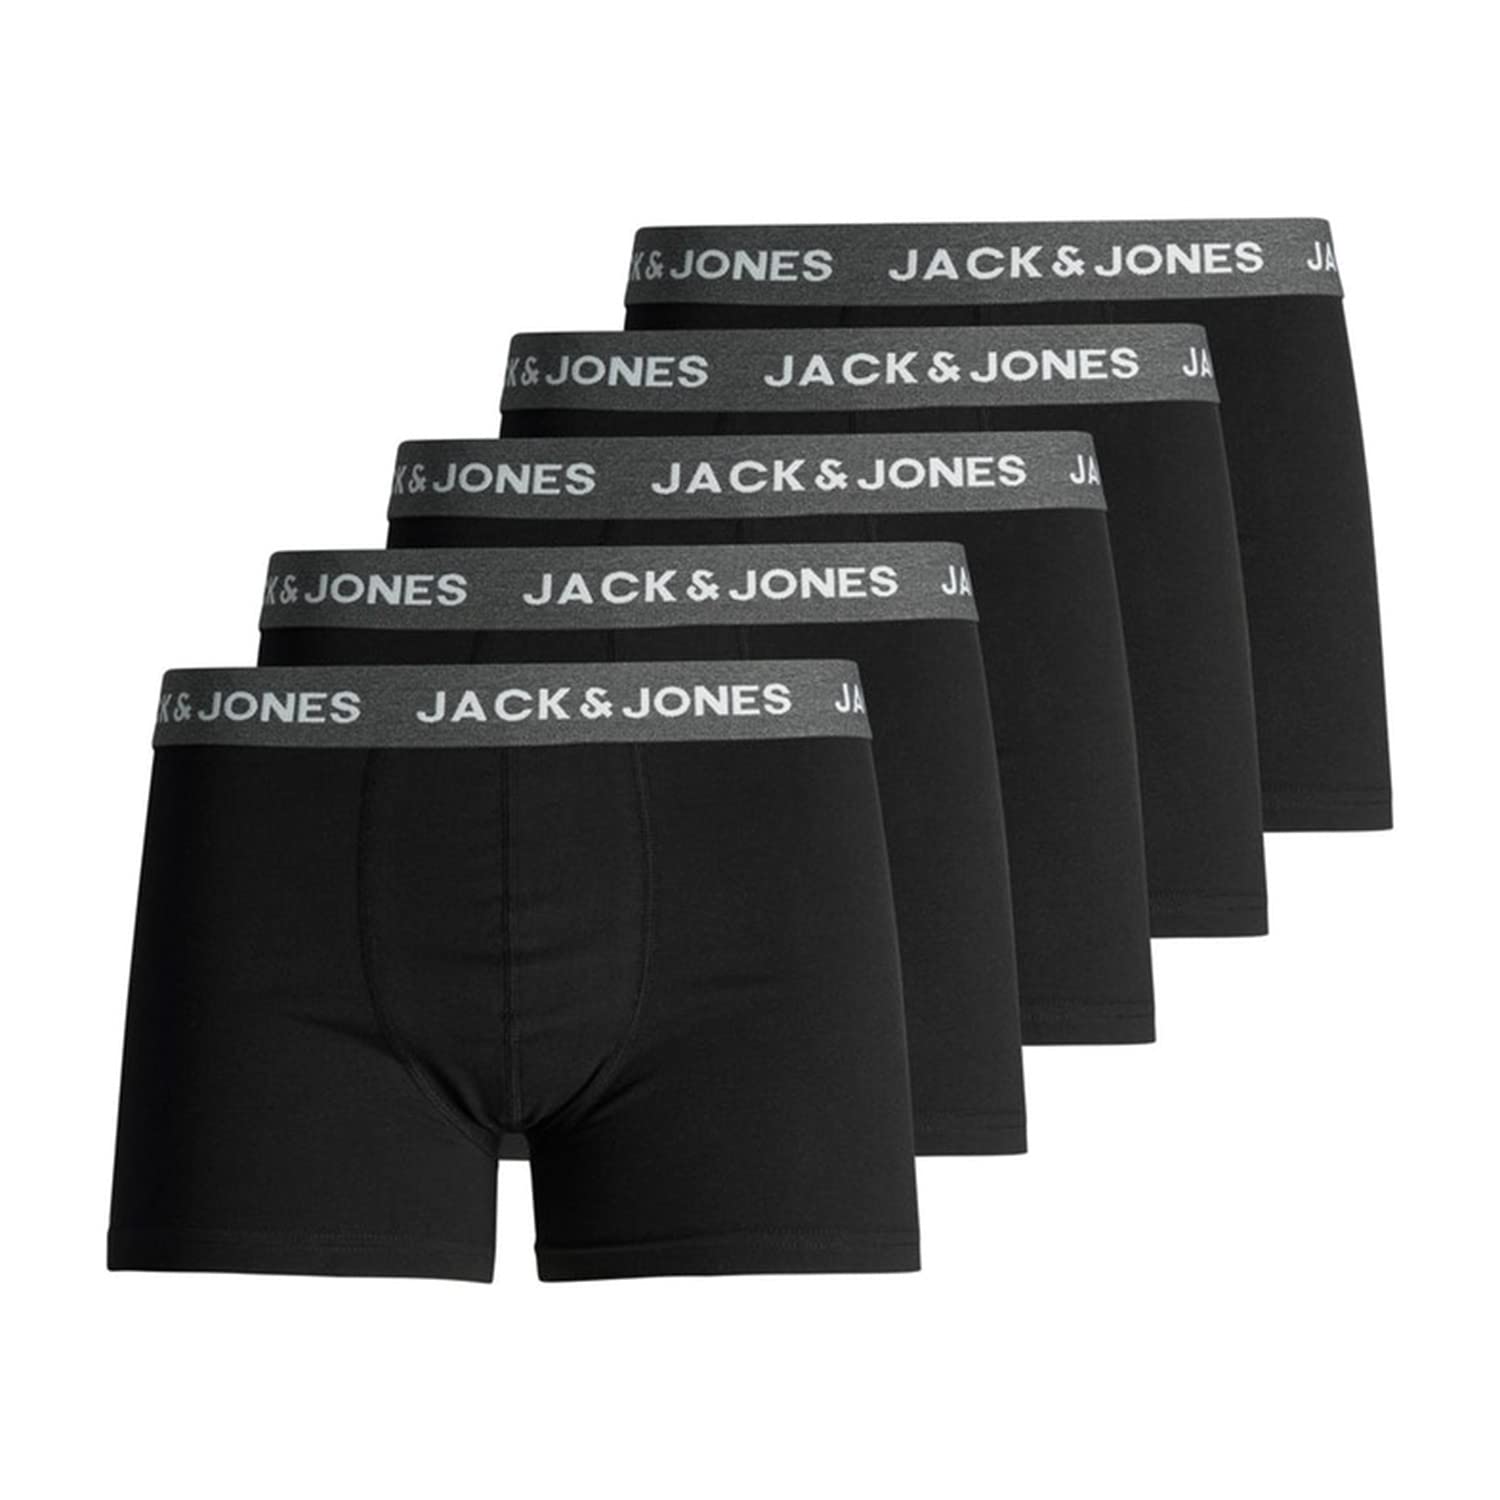 JACK & JONES Herren JACHUEY Trunks 5 Pack, Dark Grey Melange/Black & Blac, XL